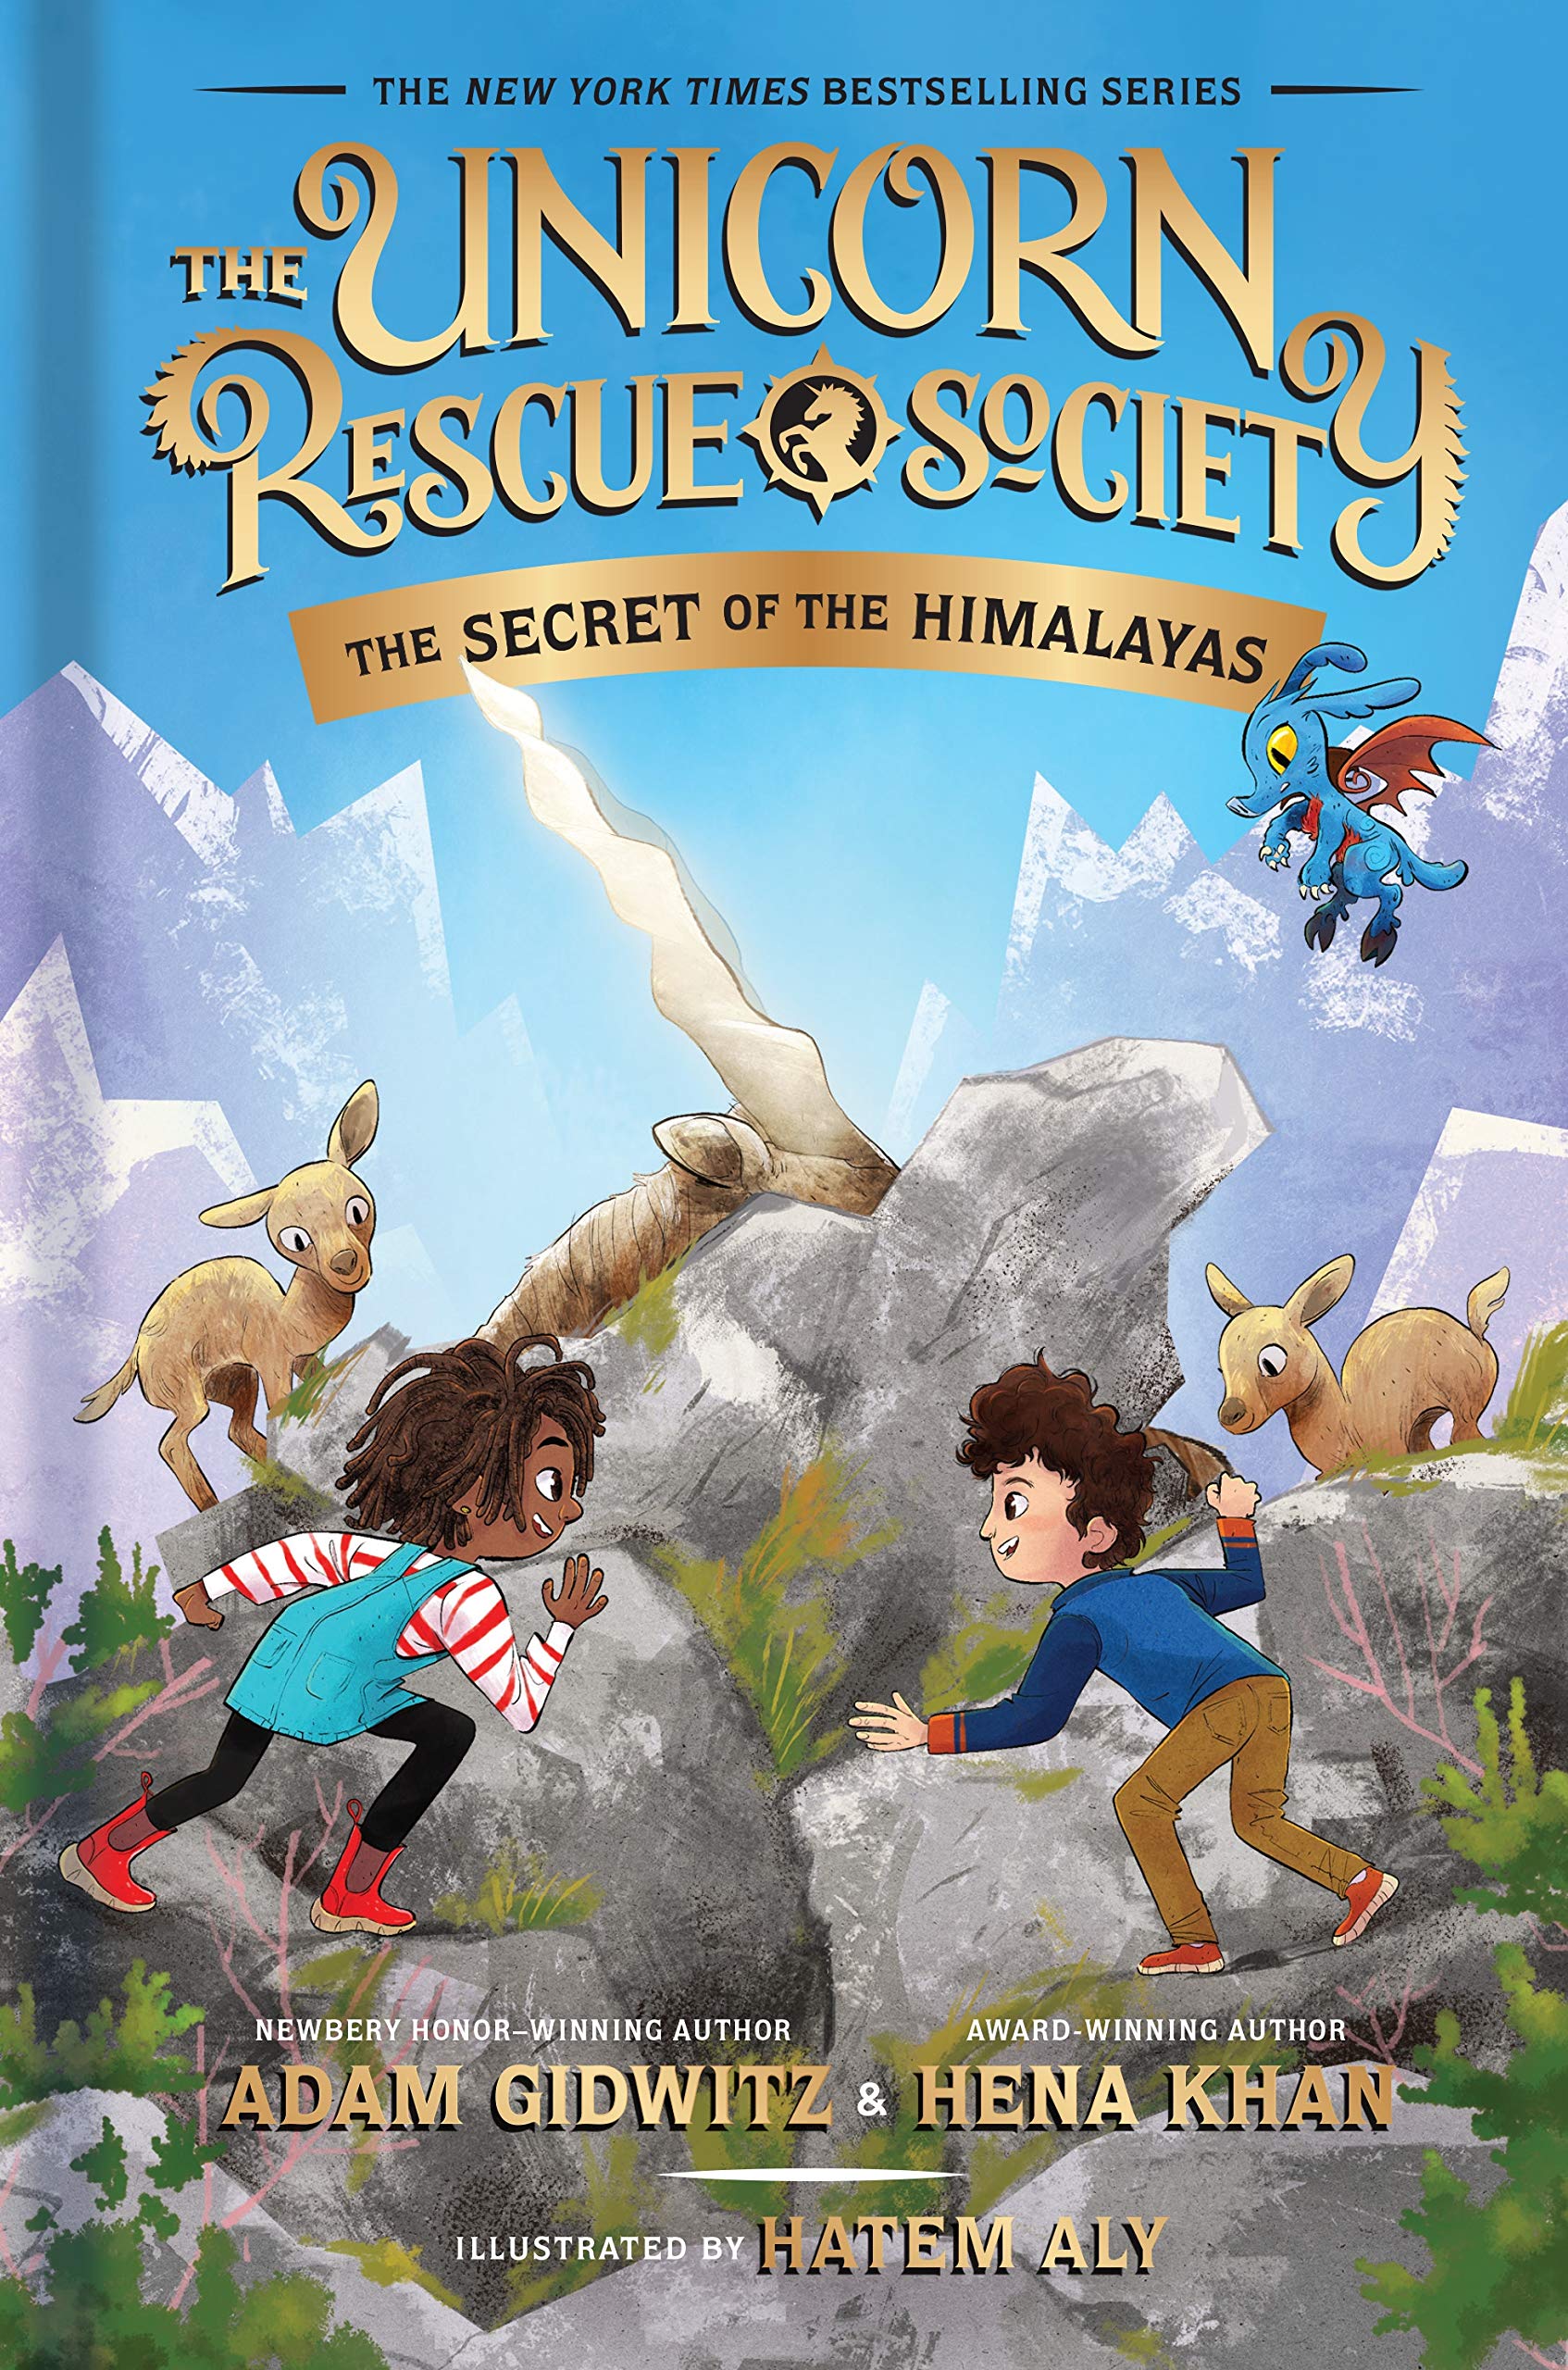 The Secret of the Himalayas (Unicorn Rescue Society Book 6) by Adam Gidwitz & Hena Khan